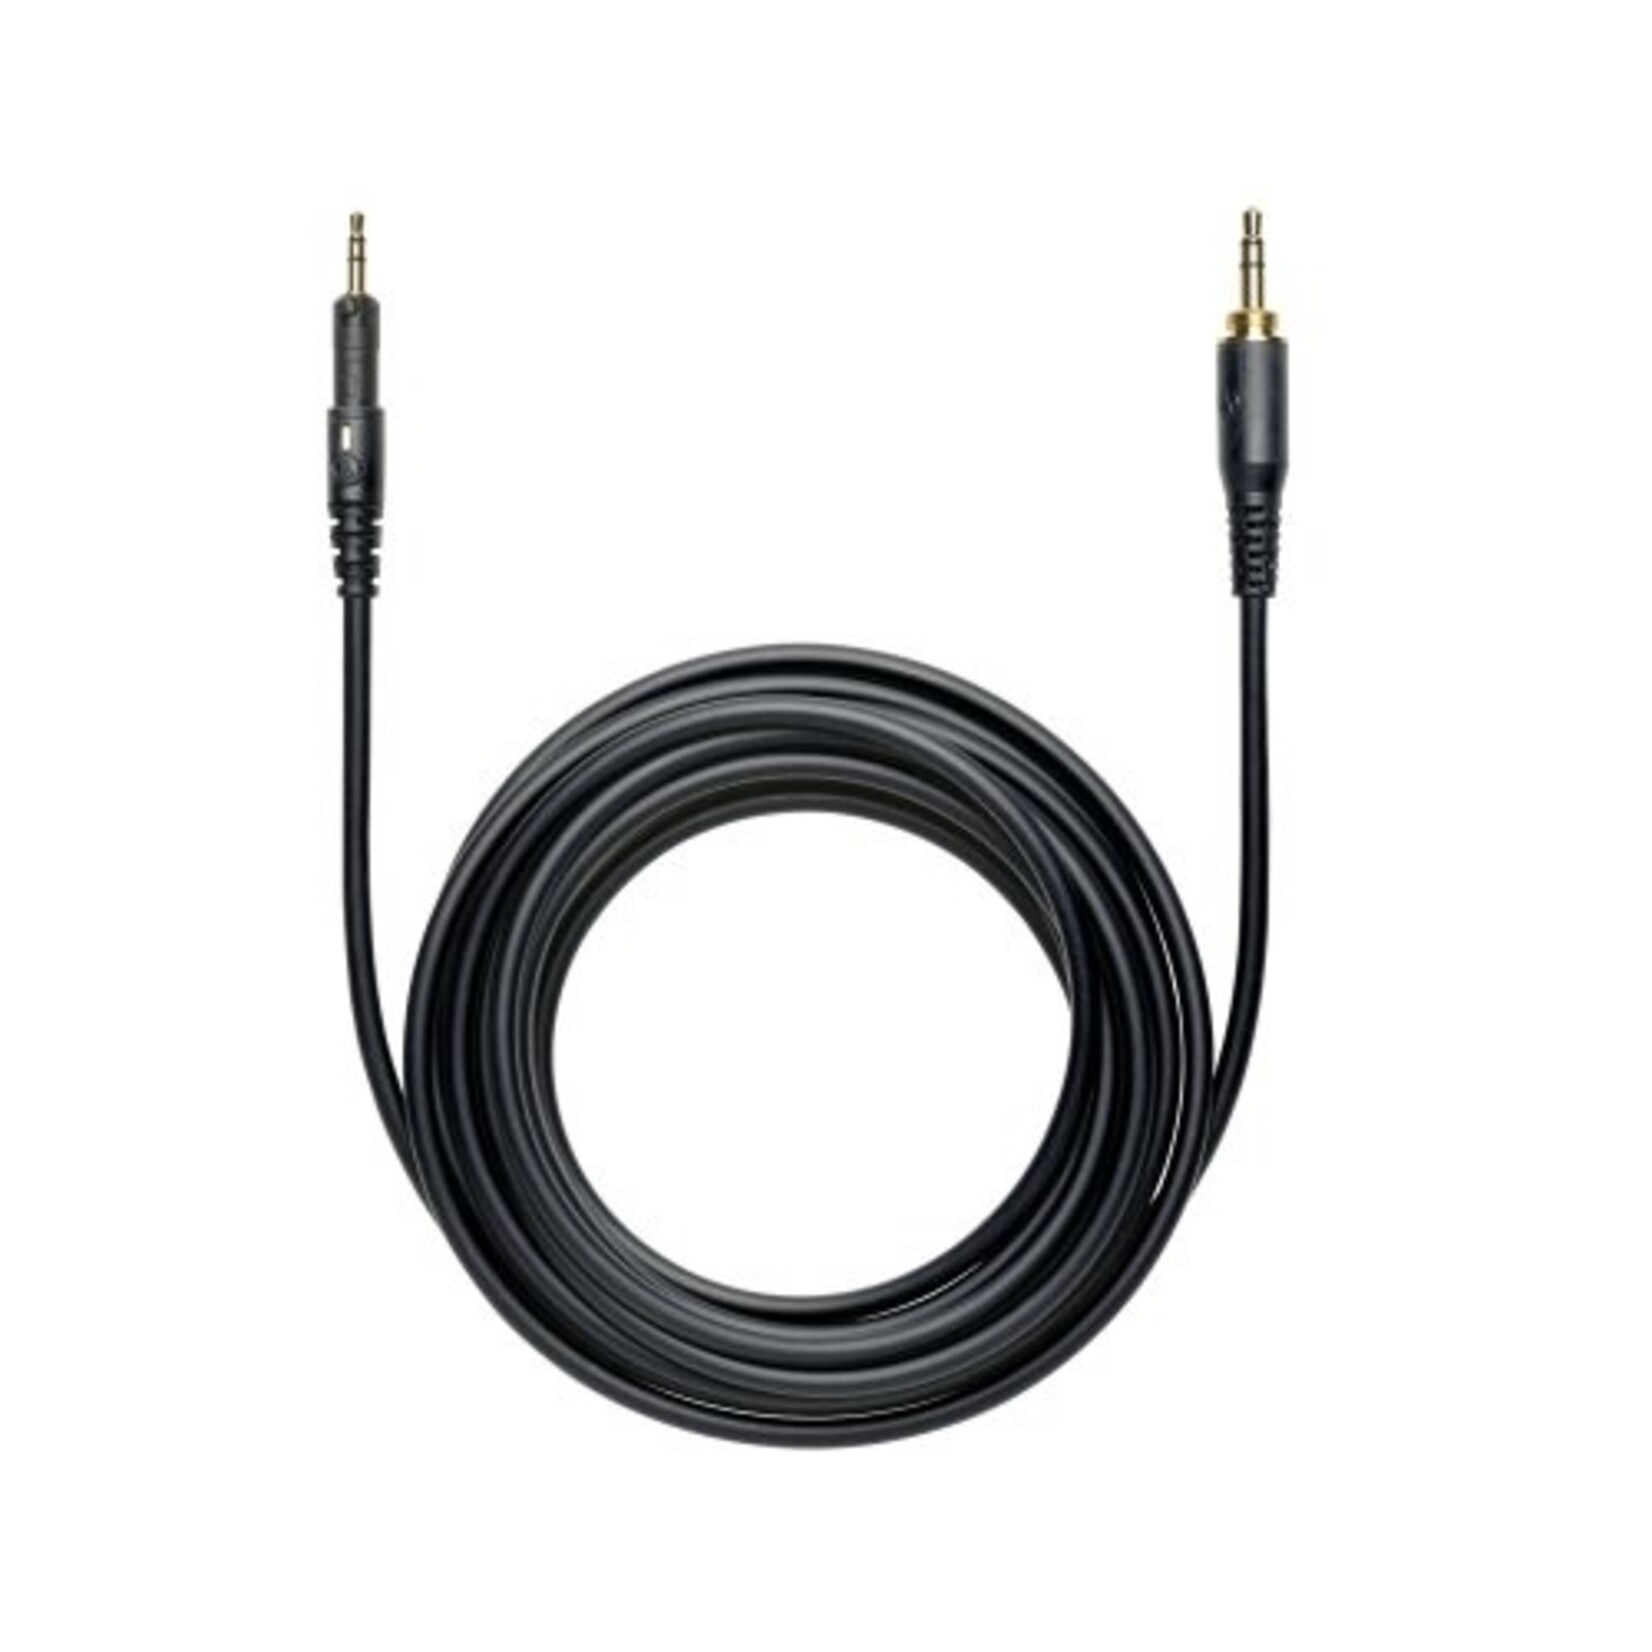 Audio-Technica ATH-M50xBK Professional Monitor Headphones - Black